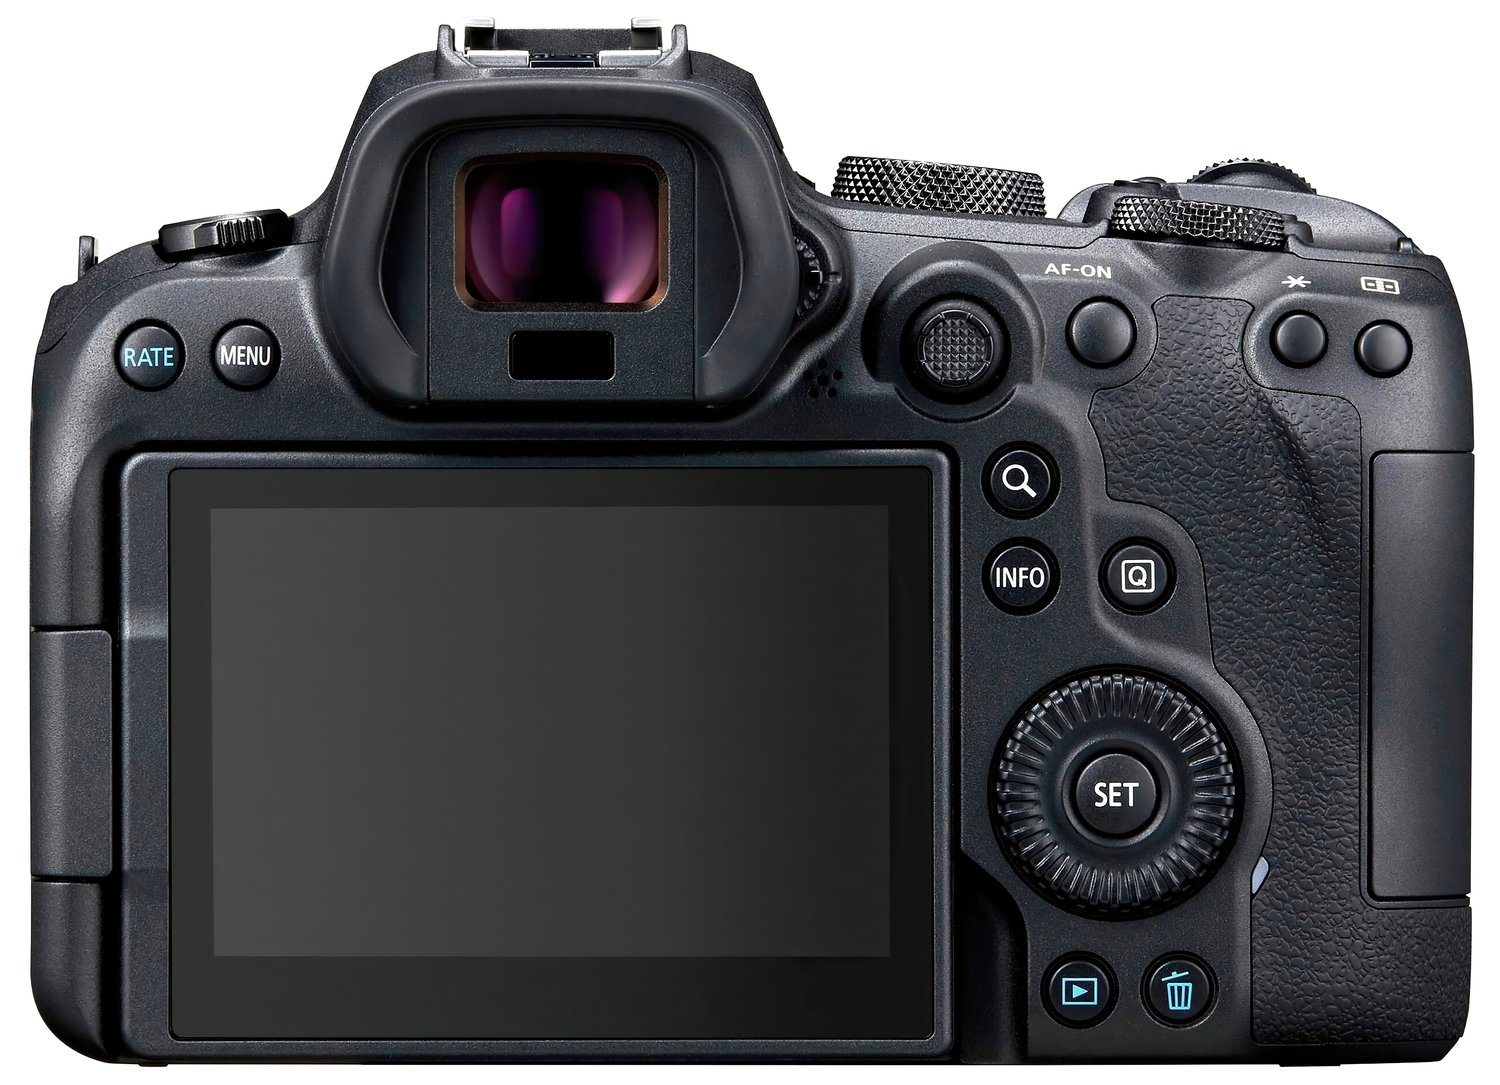  Canon EOS R6 Body+Adapter EF-EOS R